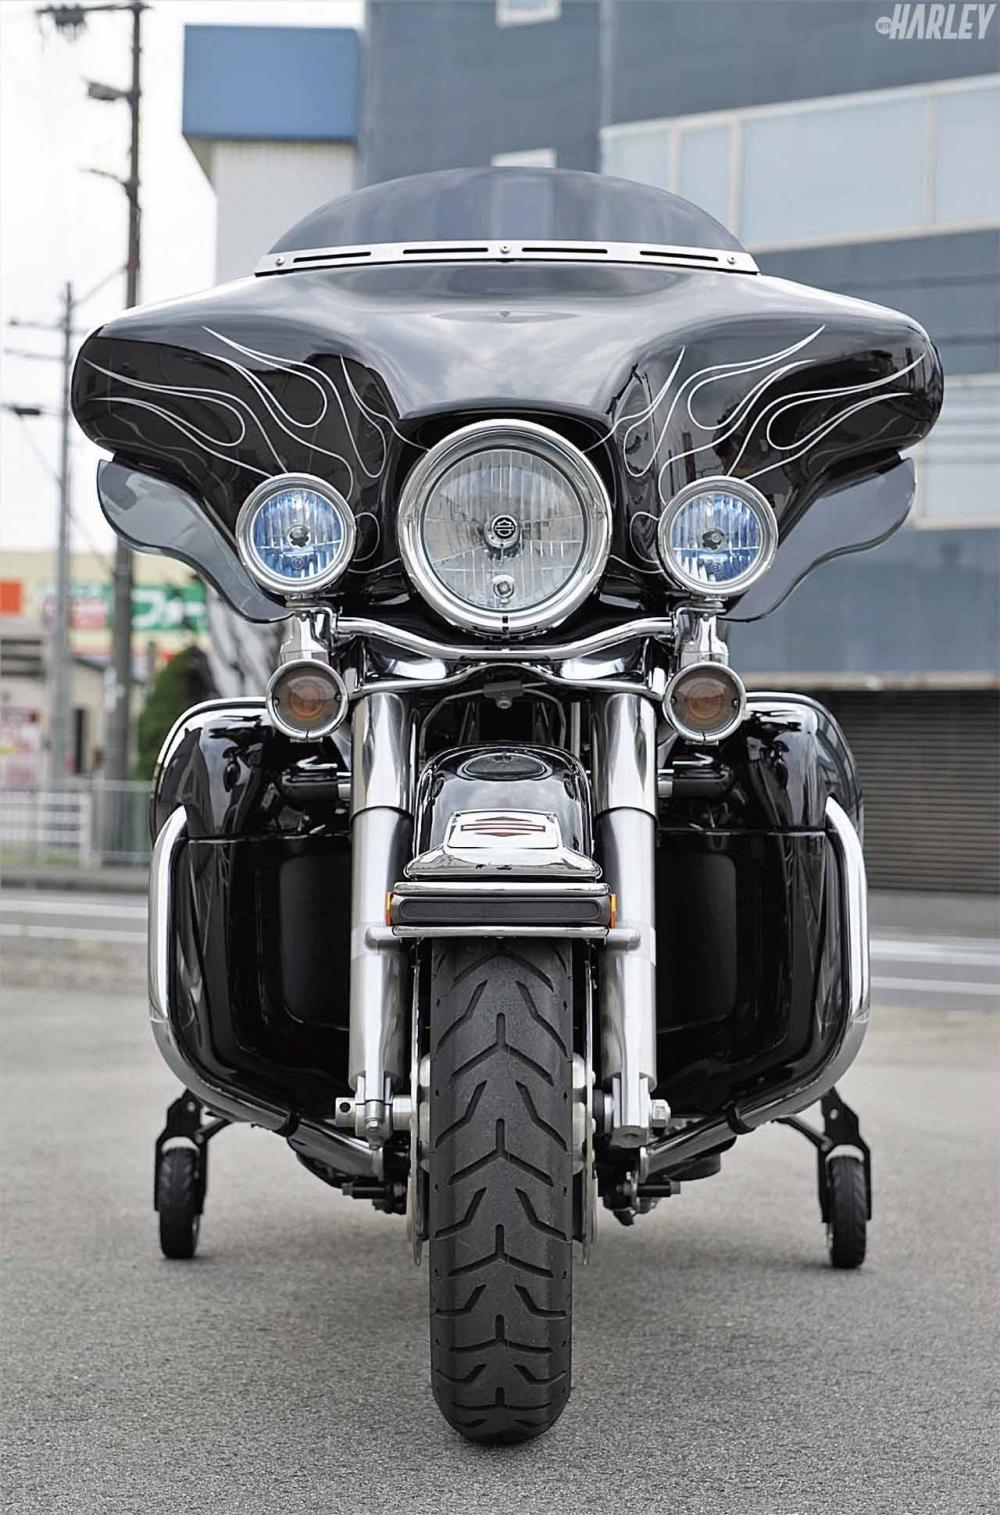 Japoneses idealizam rodinhas para Harley-Davidson